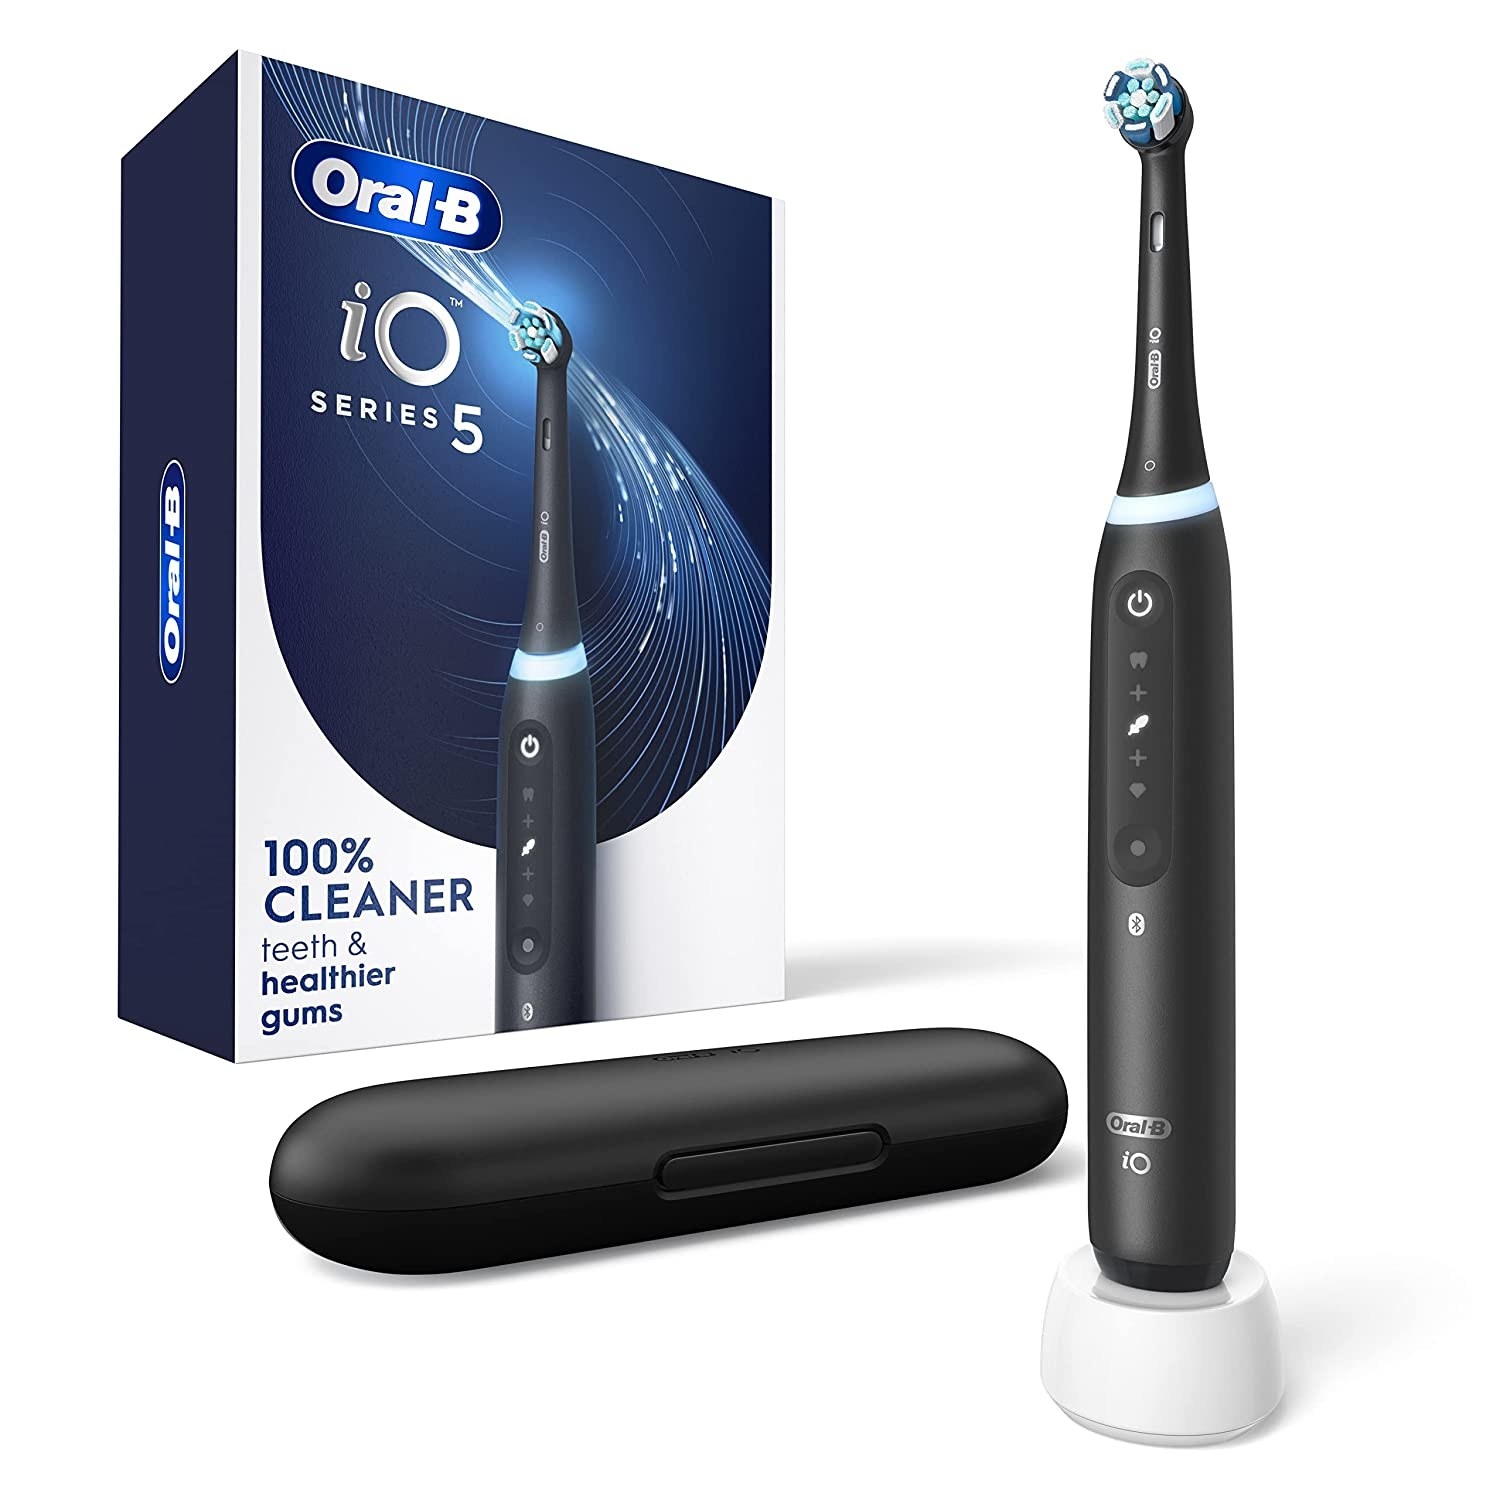 The iO5 toothbrush